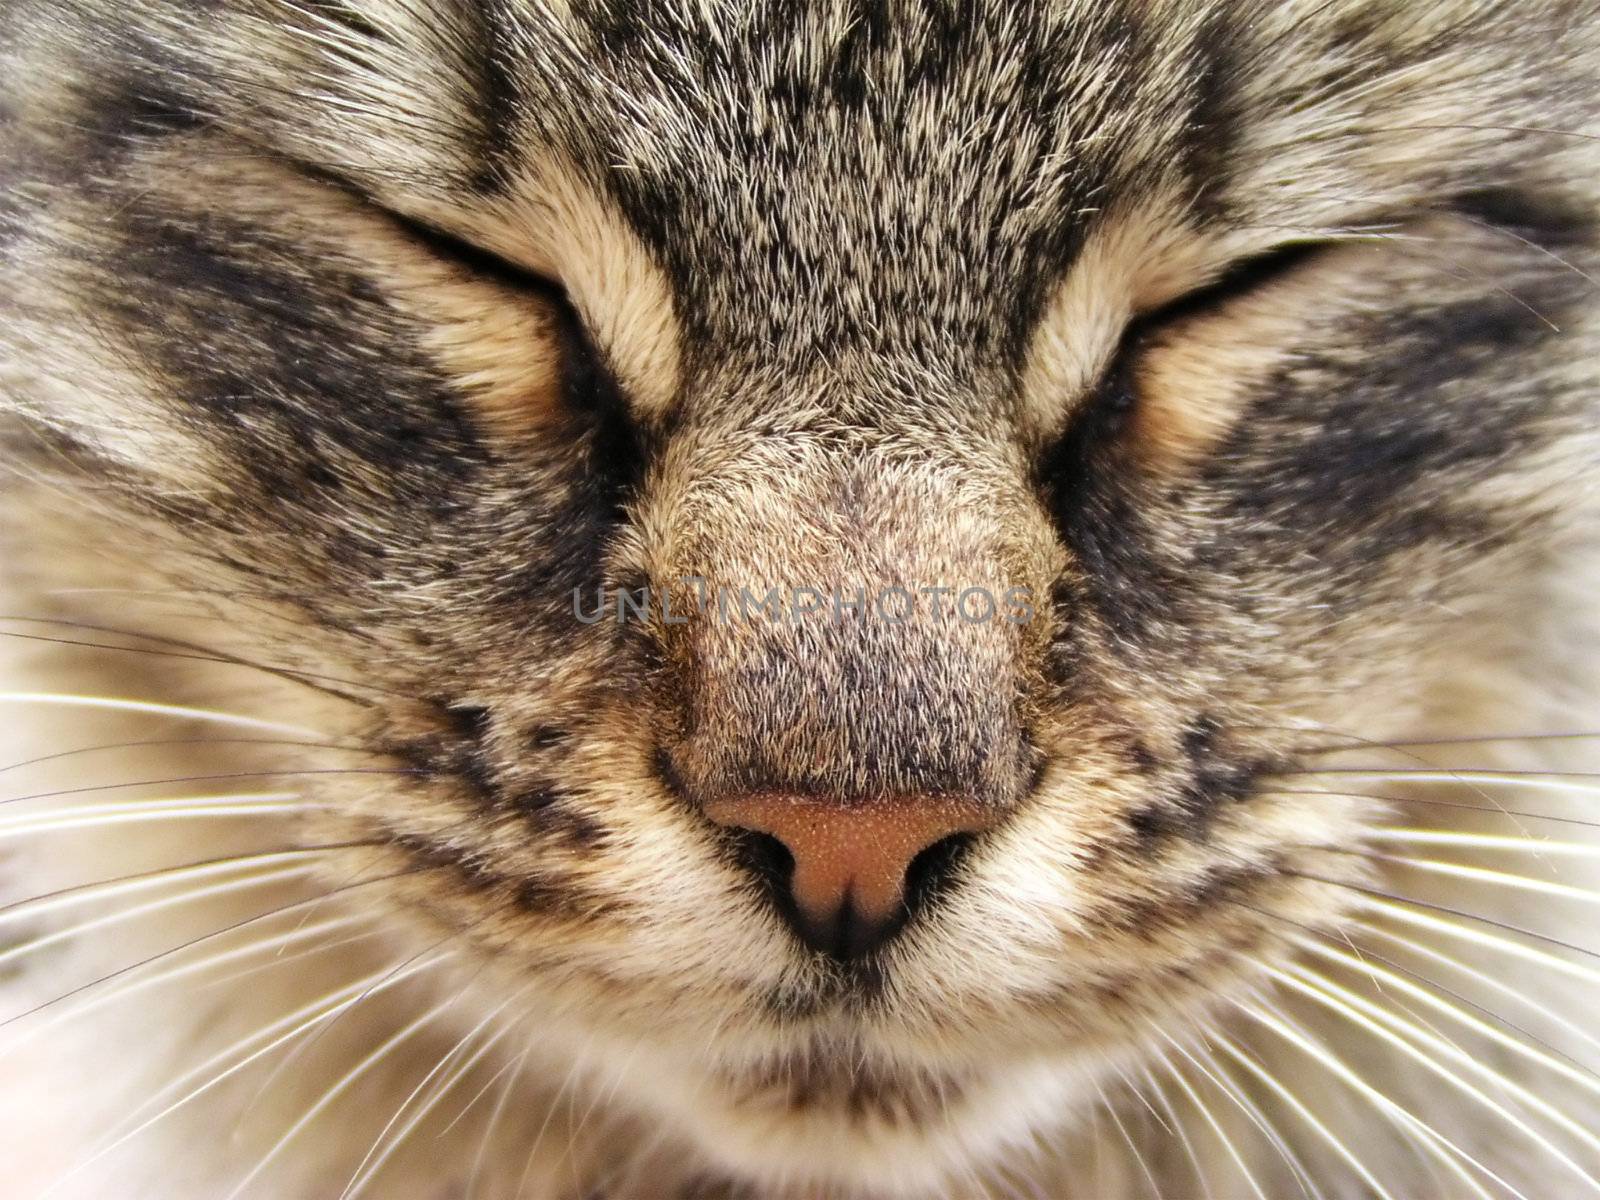 Tabby cat head close-up